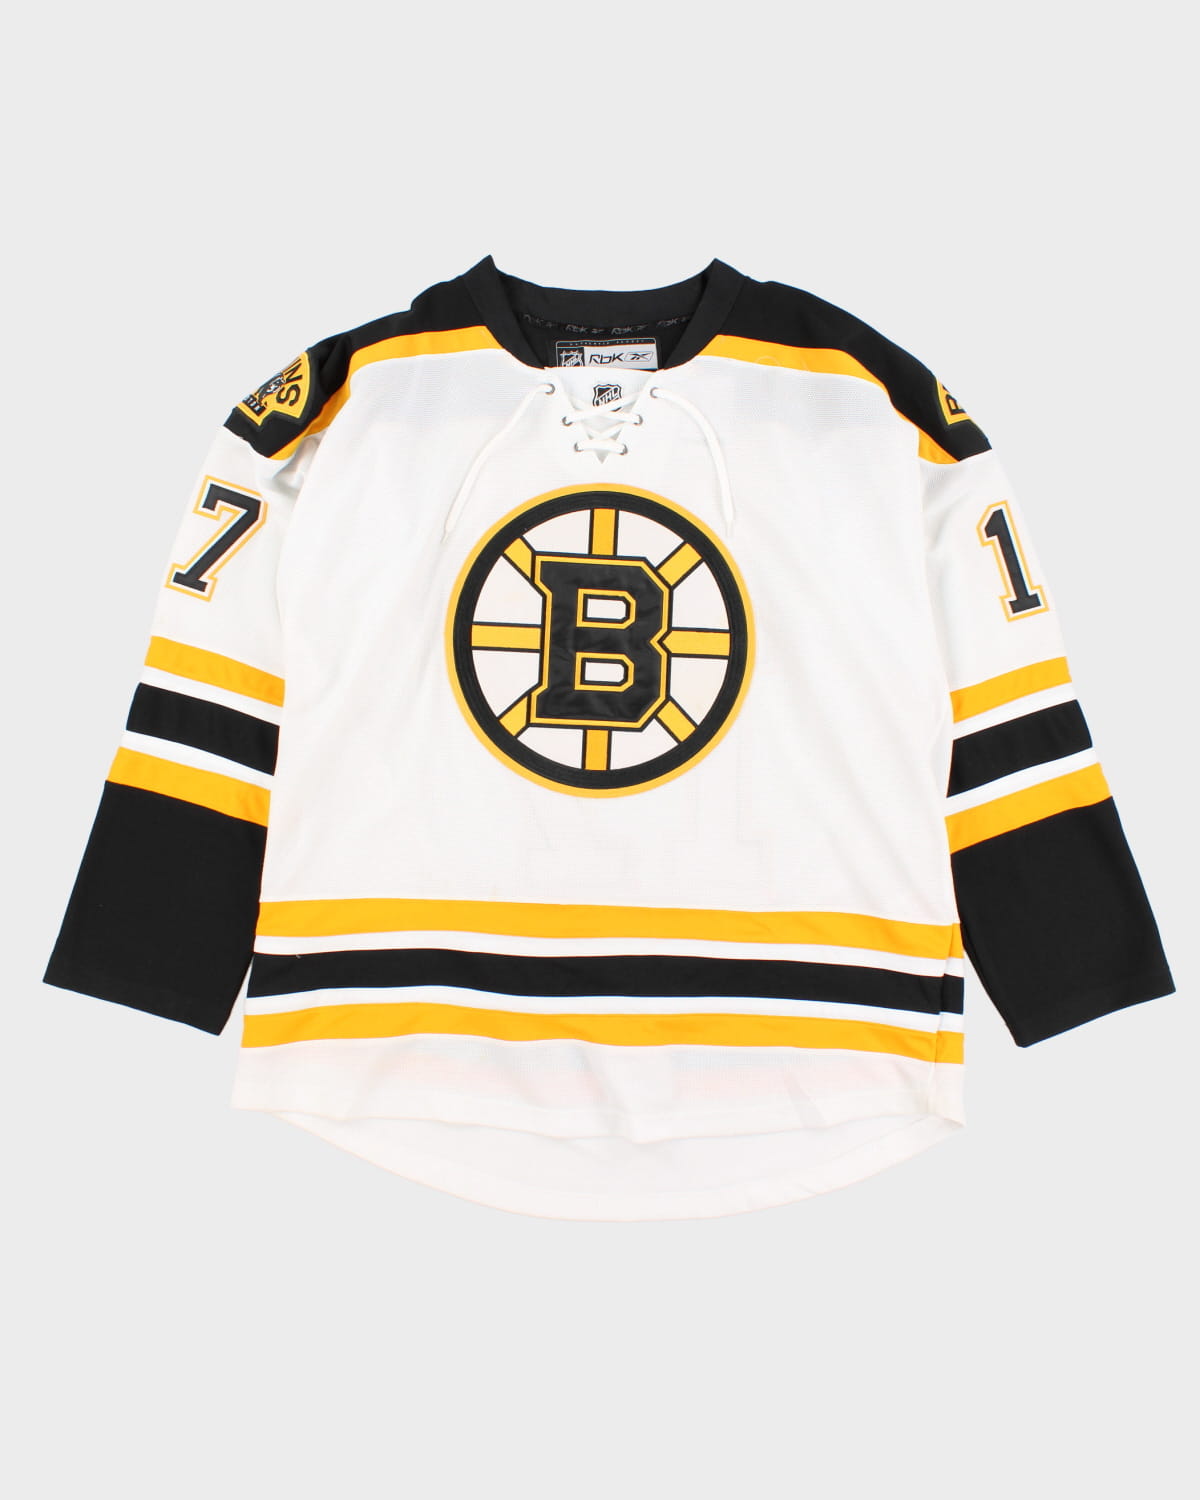 Reebok, Shirts, Authentic Bruins Milan Lucic Jersey